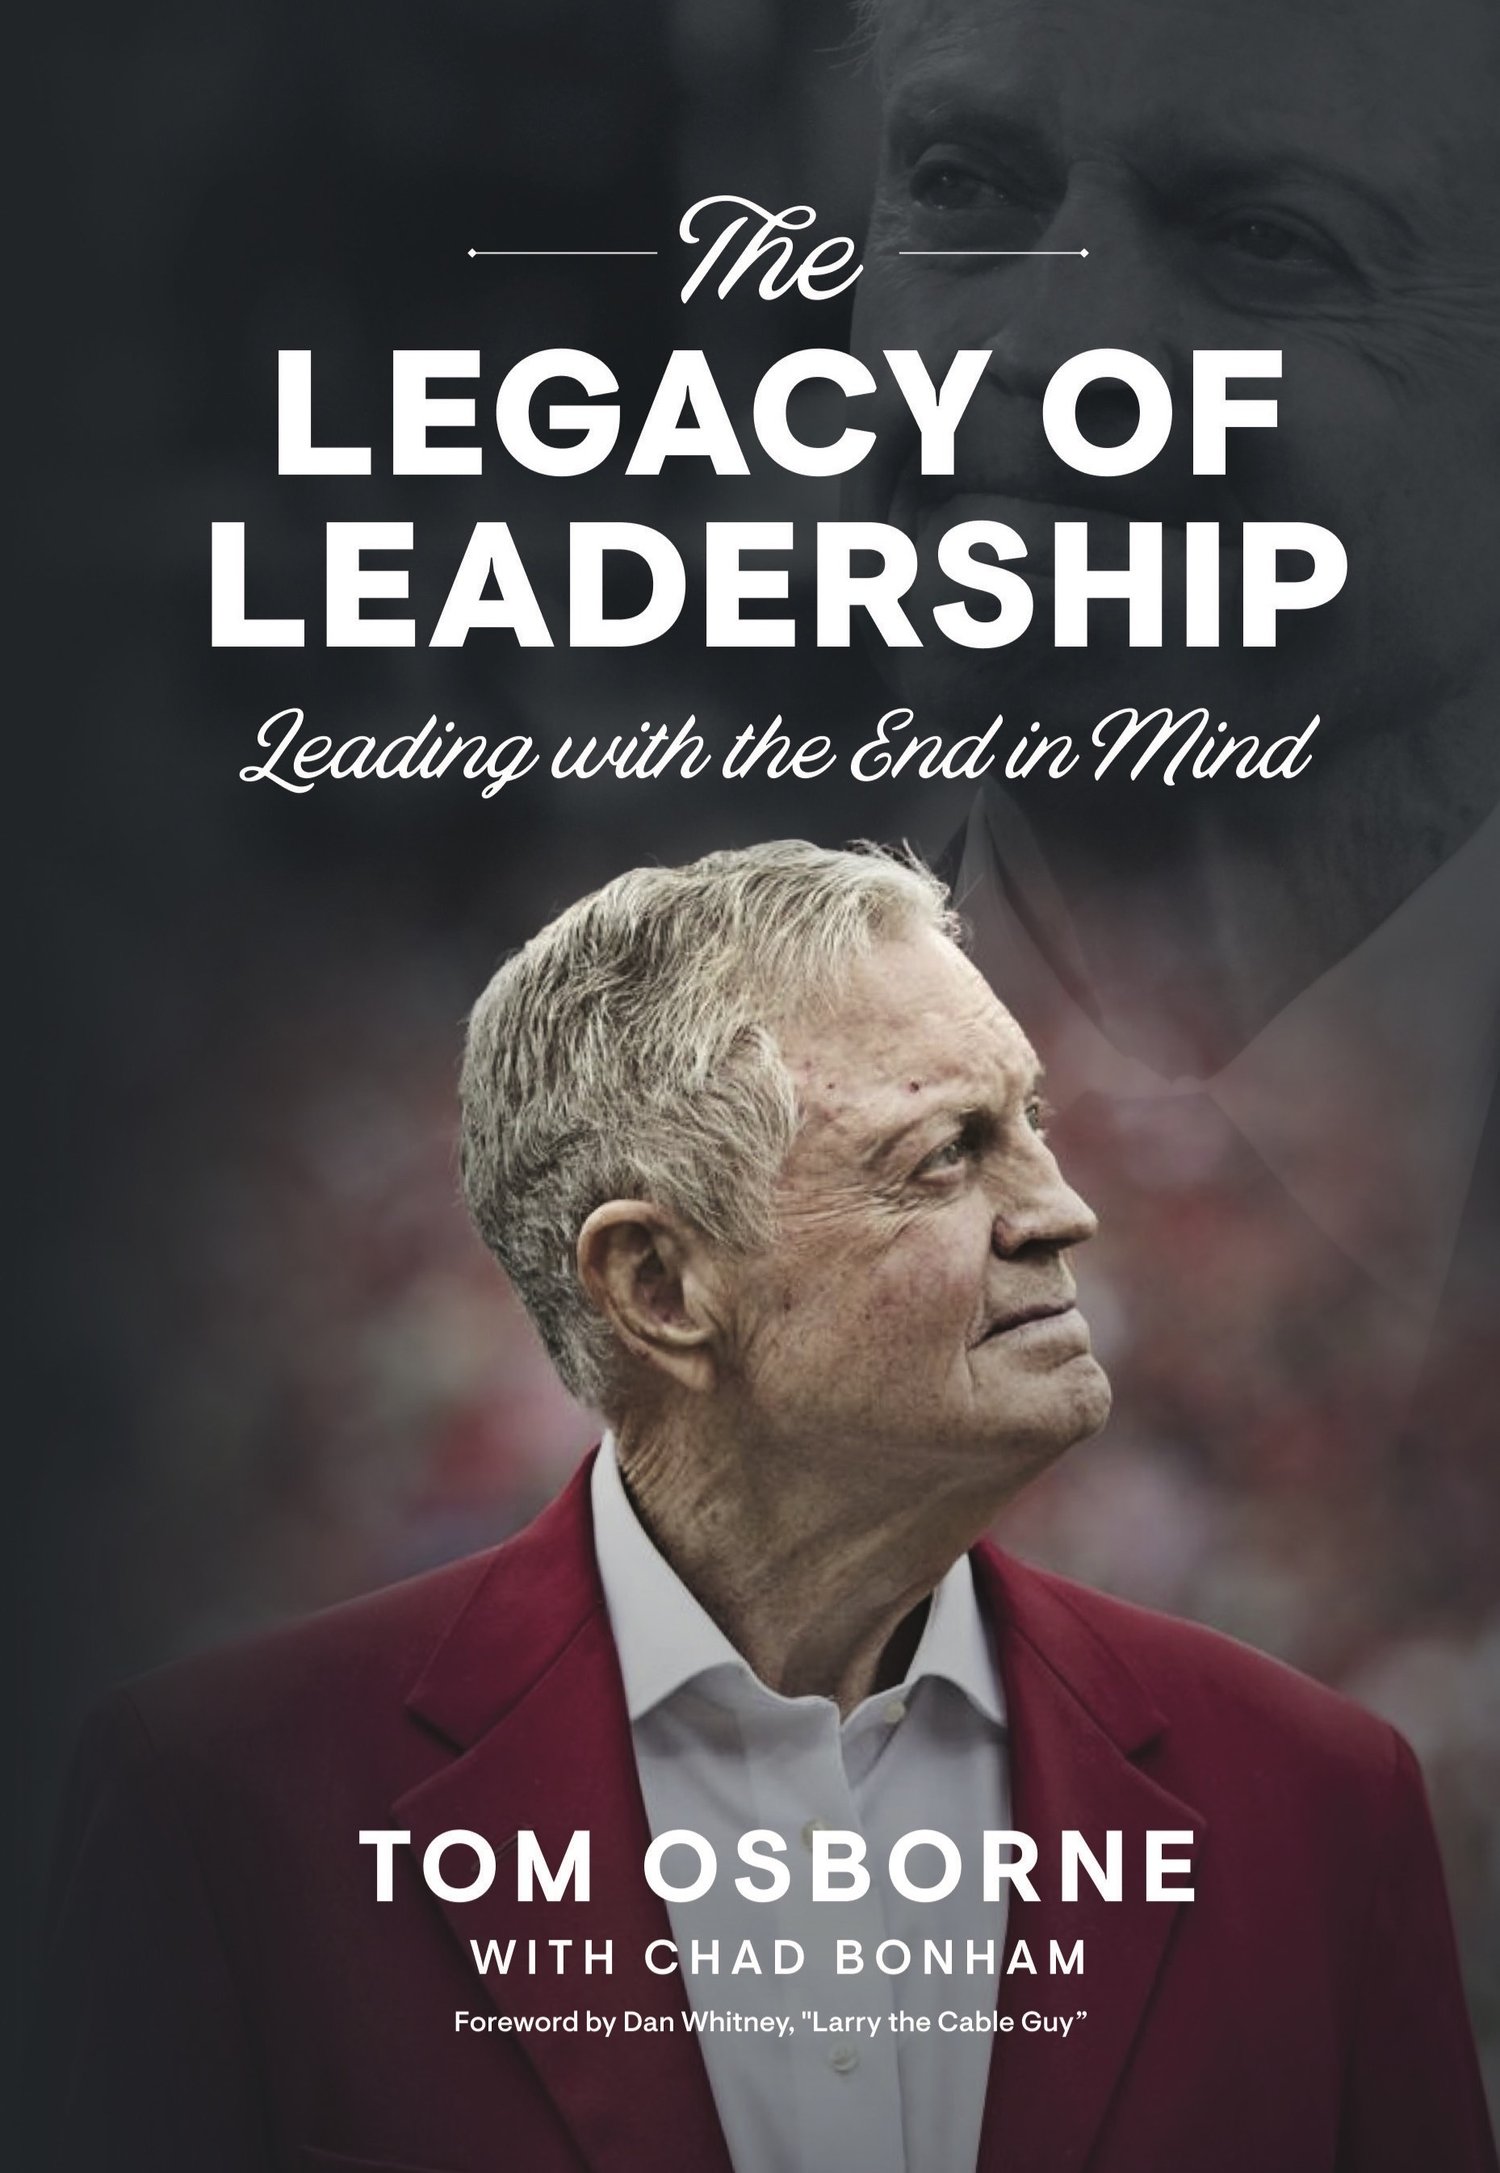 The Legacy of Leadership Limited Hardback Edition — Cross Training